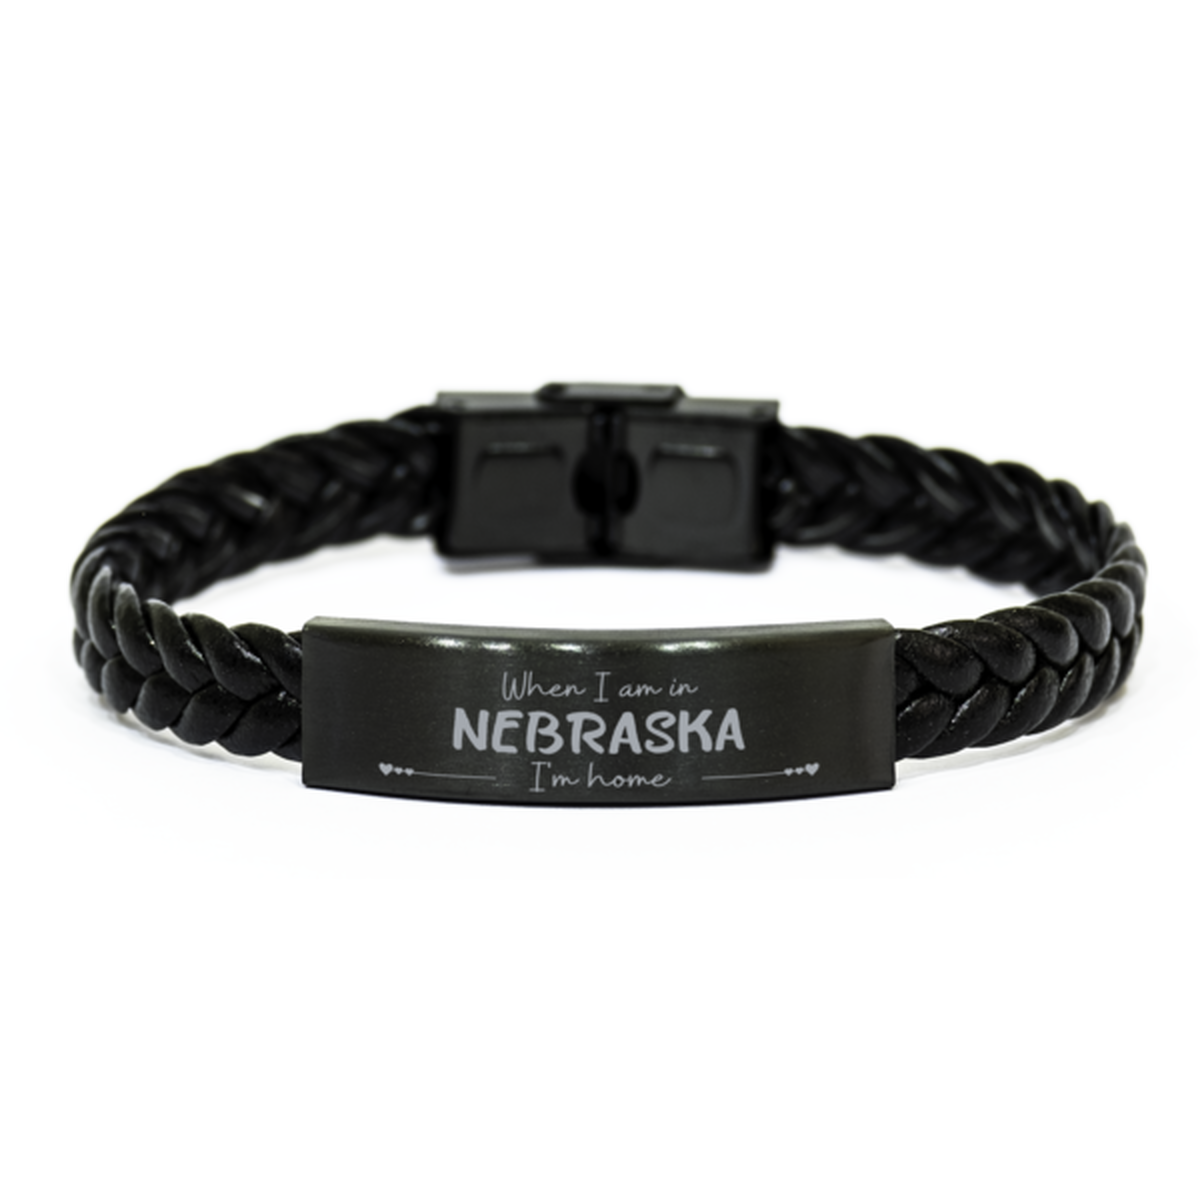 When I am in Nebraska I'm home Braided Leather Bracelet, Cheap Gifts For Nebraska, State Nebraska Birthday Gifts for Friends Coworker